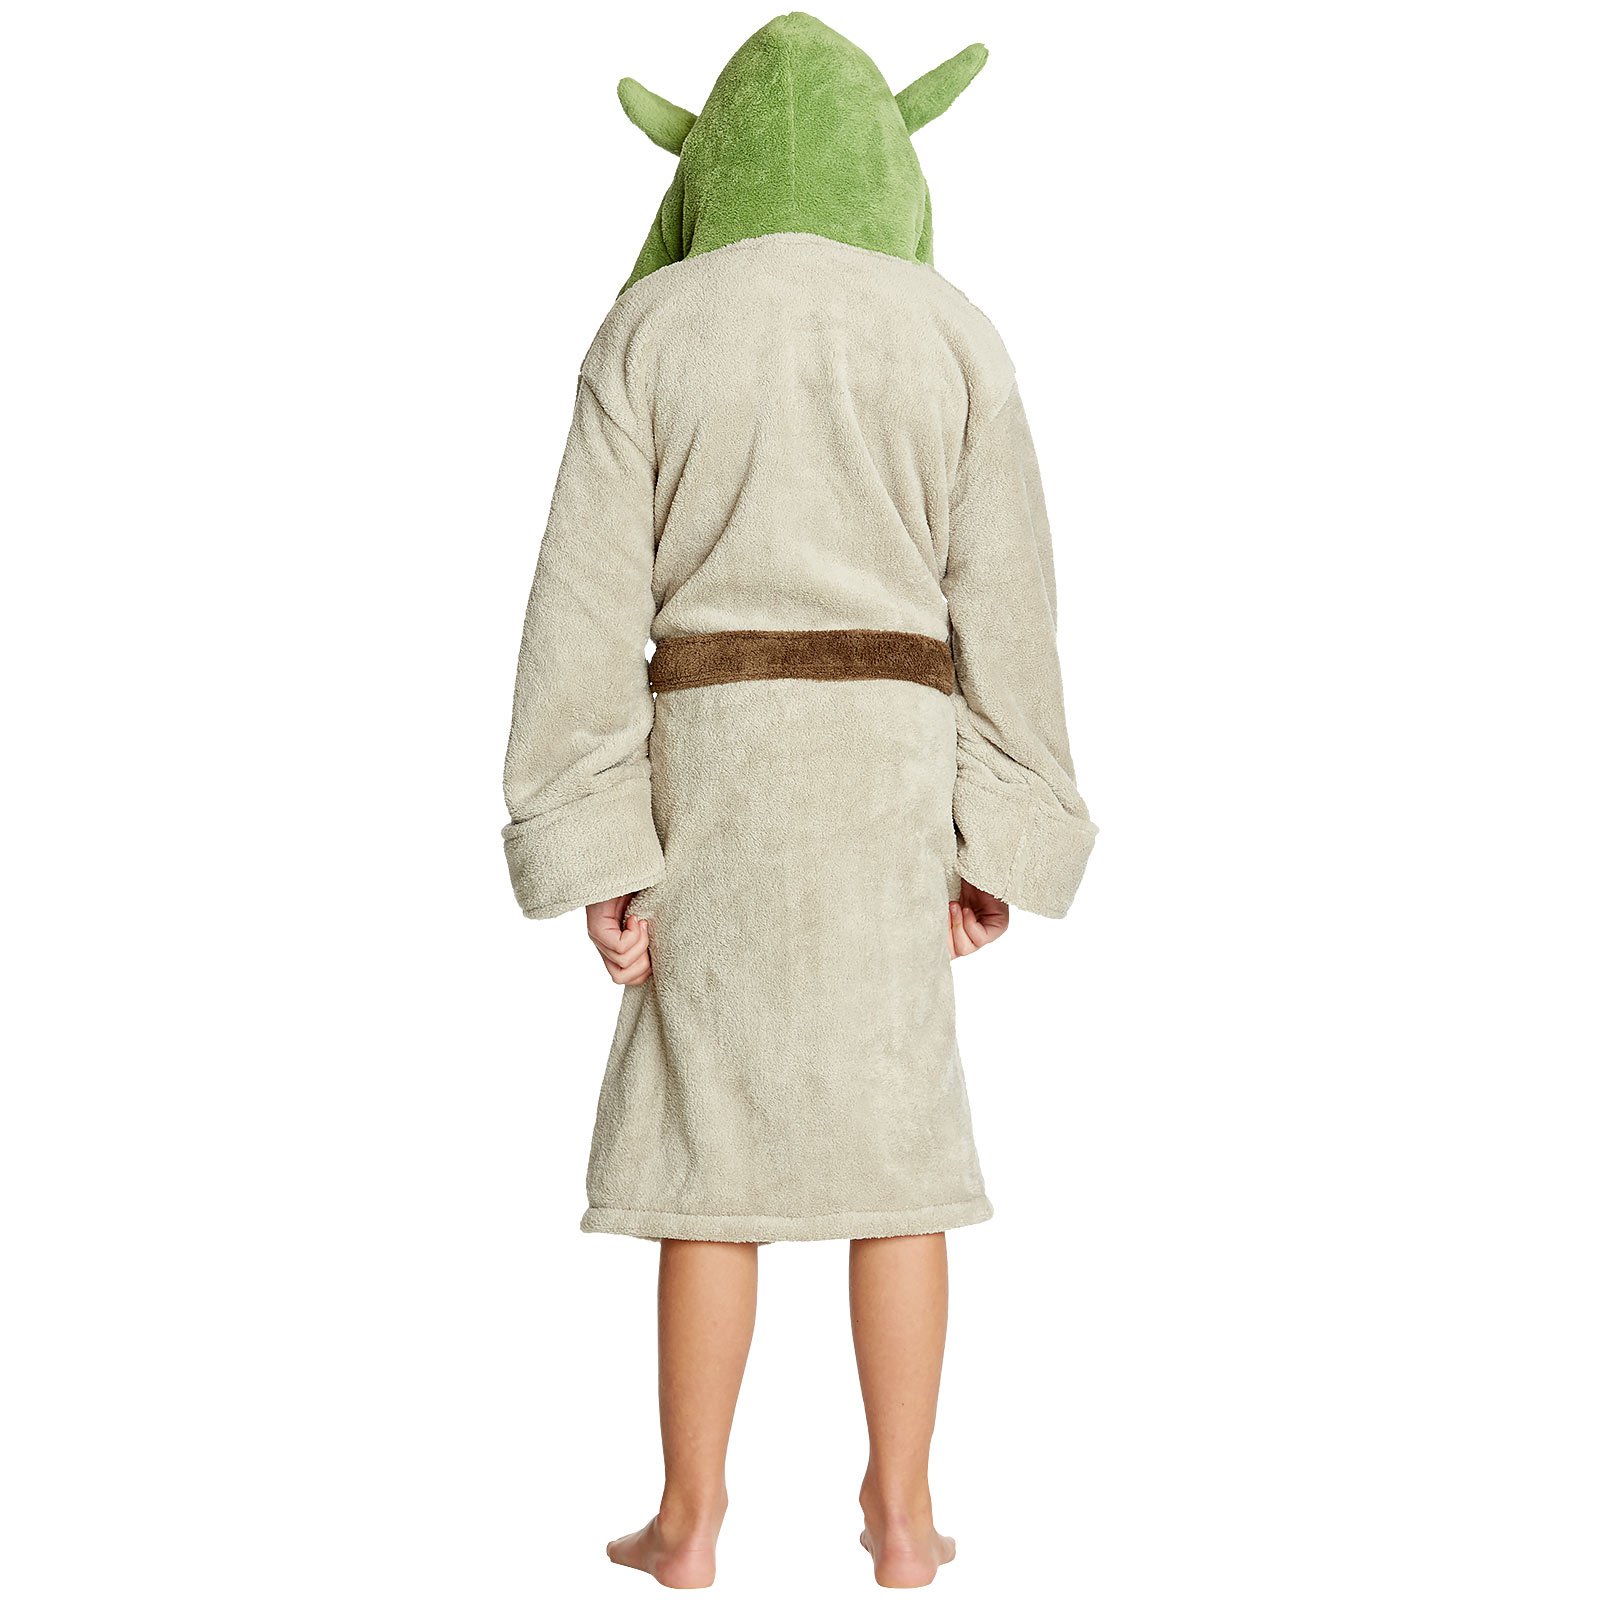 Star Wars - Yoda Children's Bathrobe